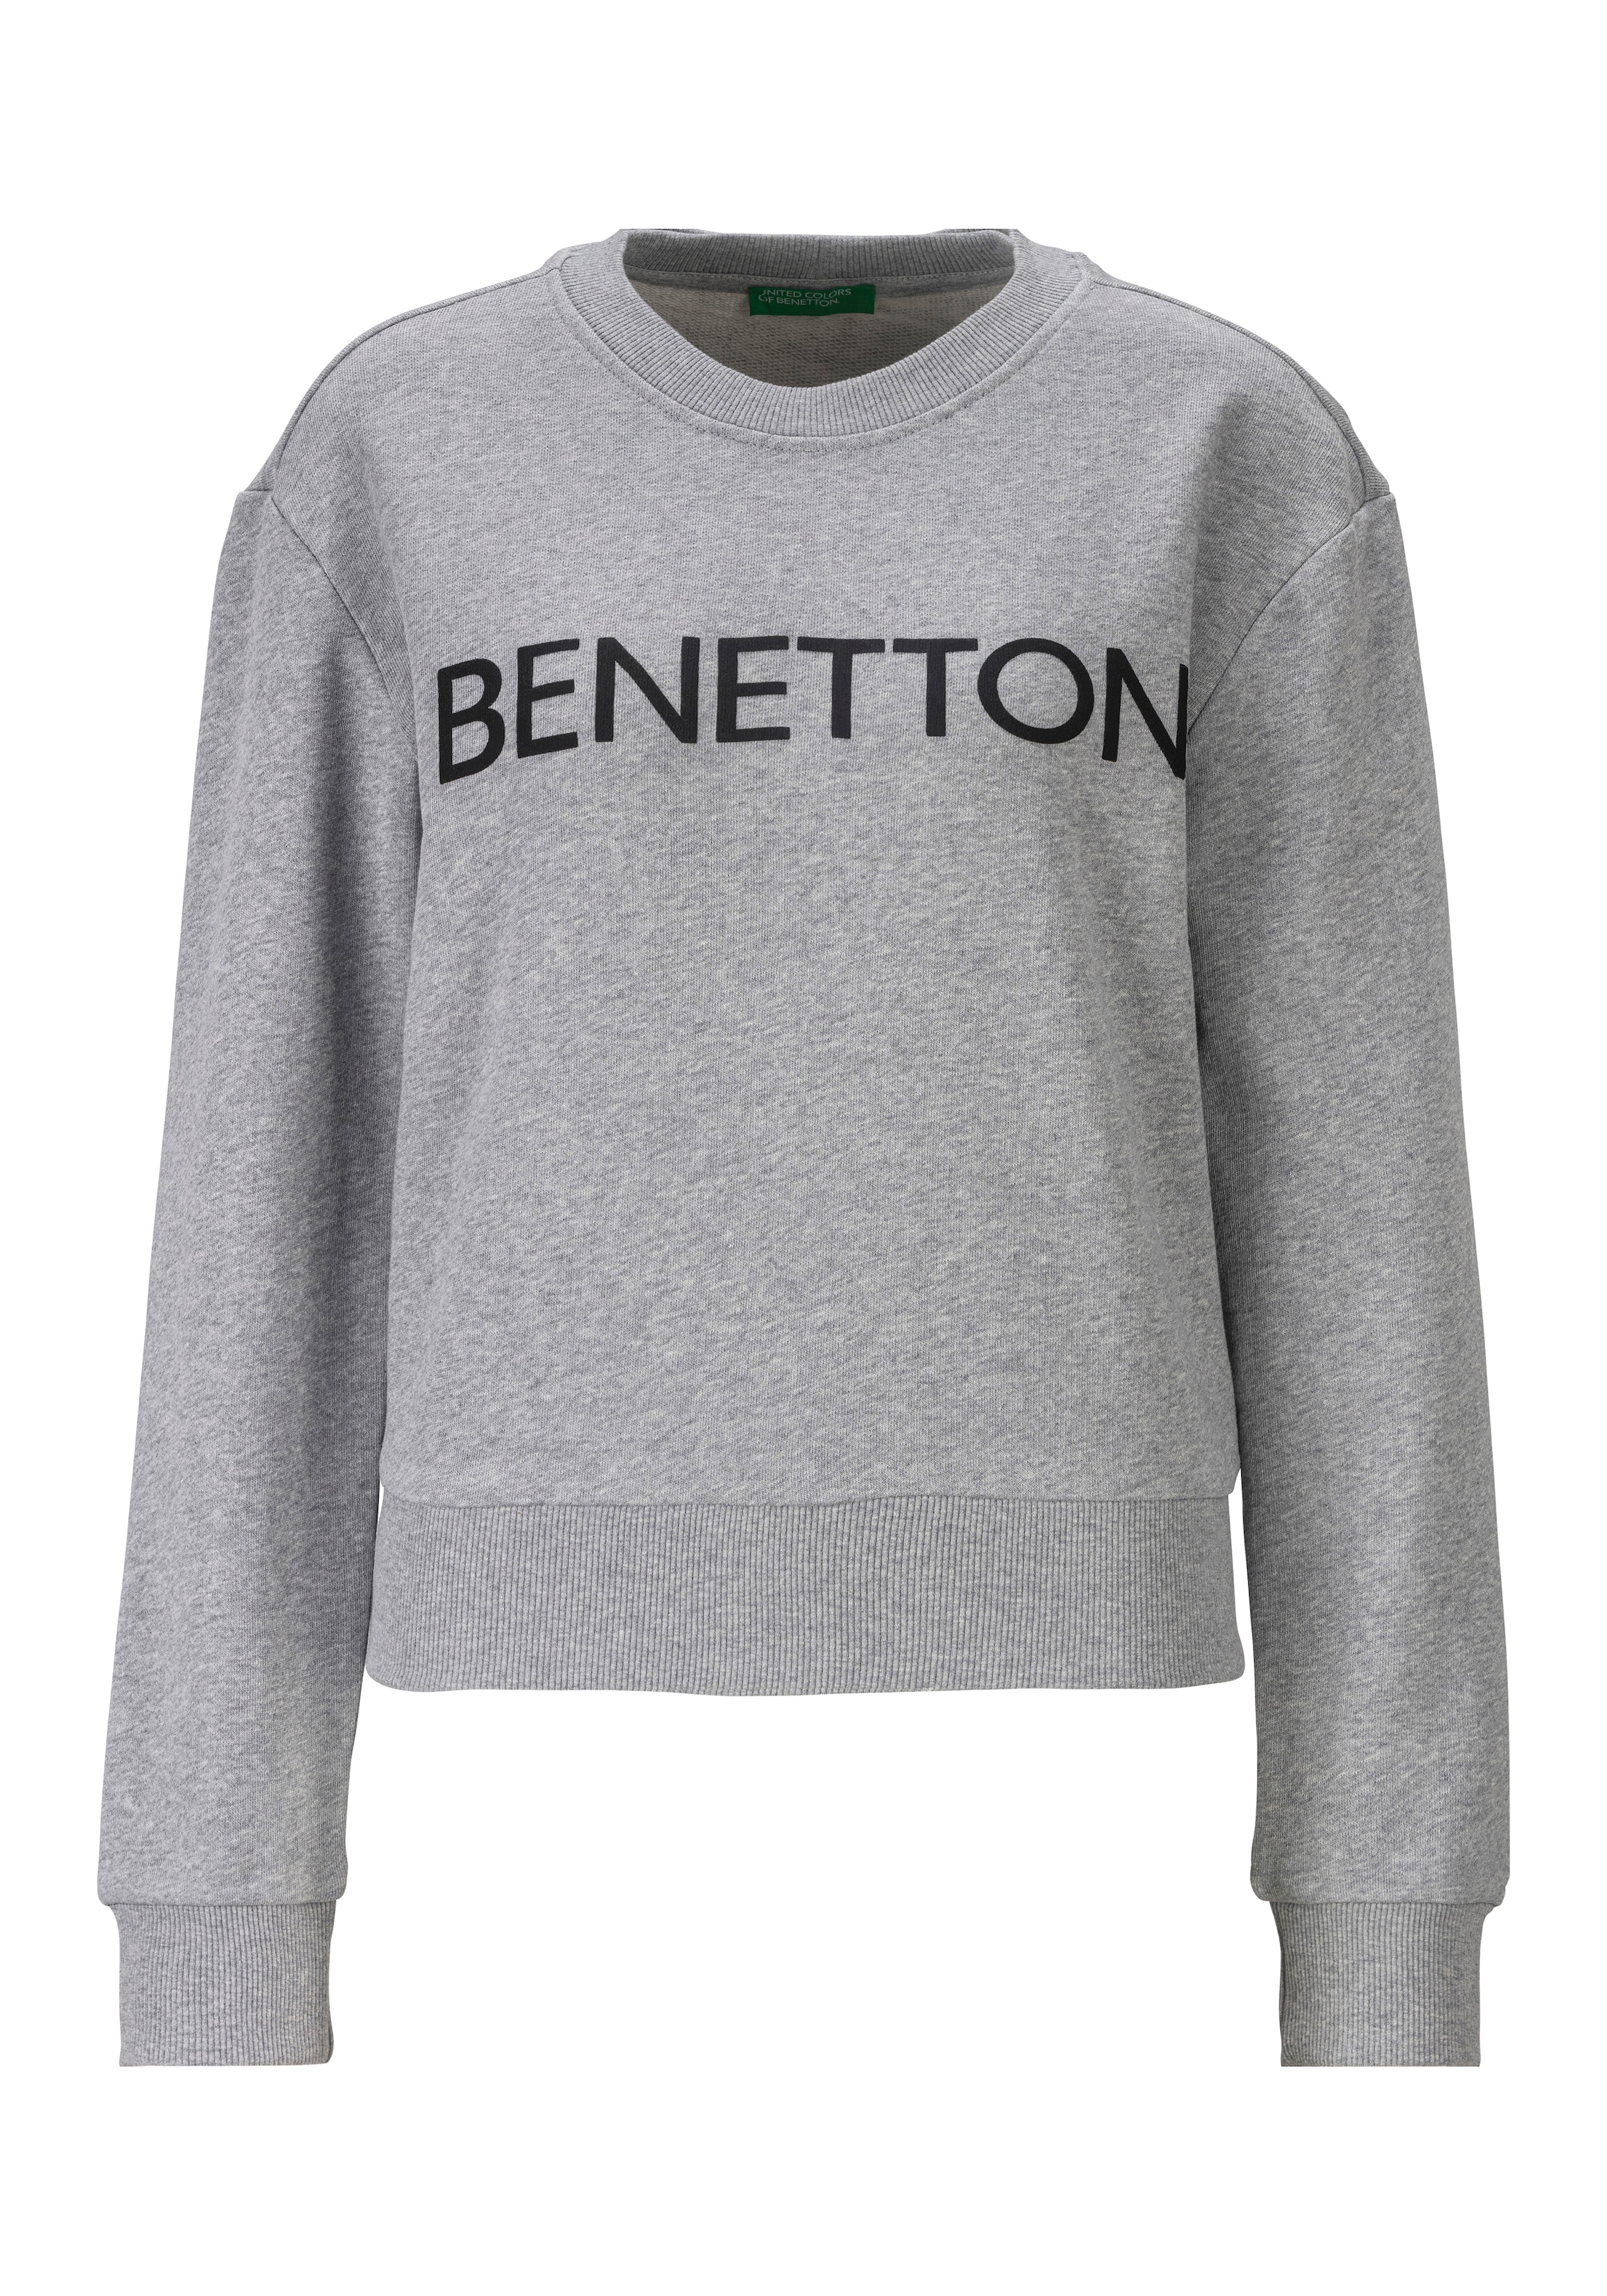 United Colors of Benetton Sweatshirt, mit Benetton Aufdruck